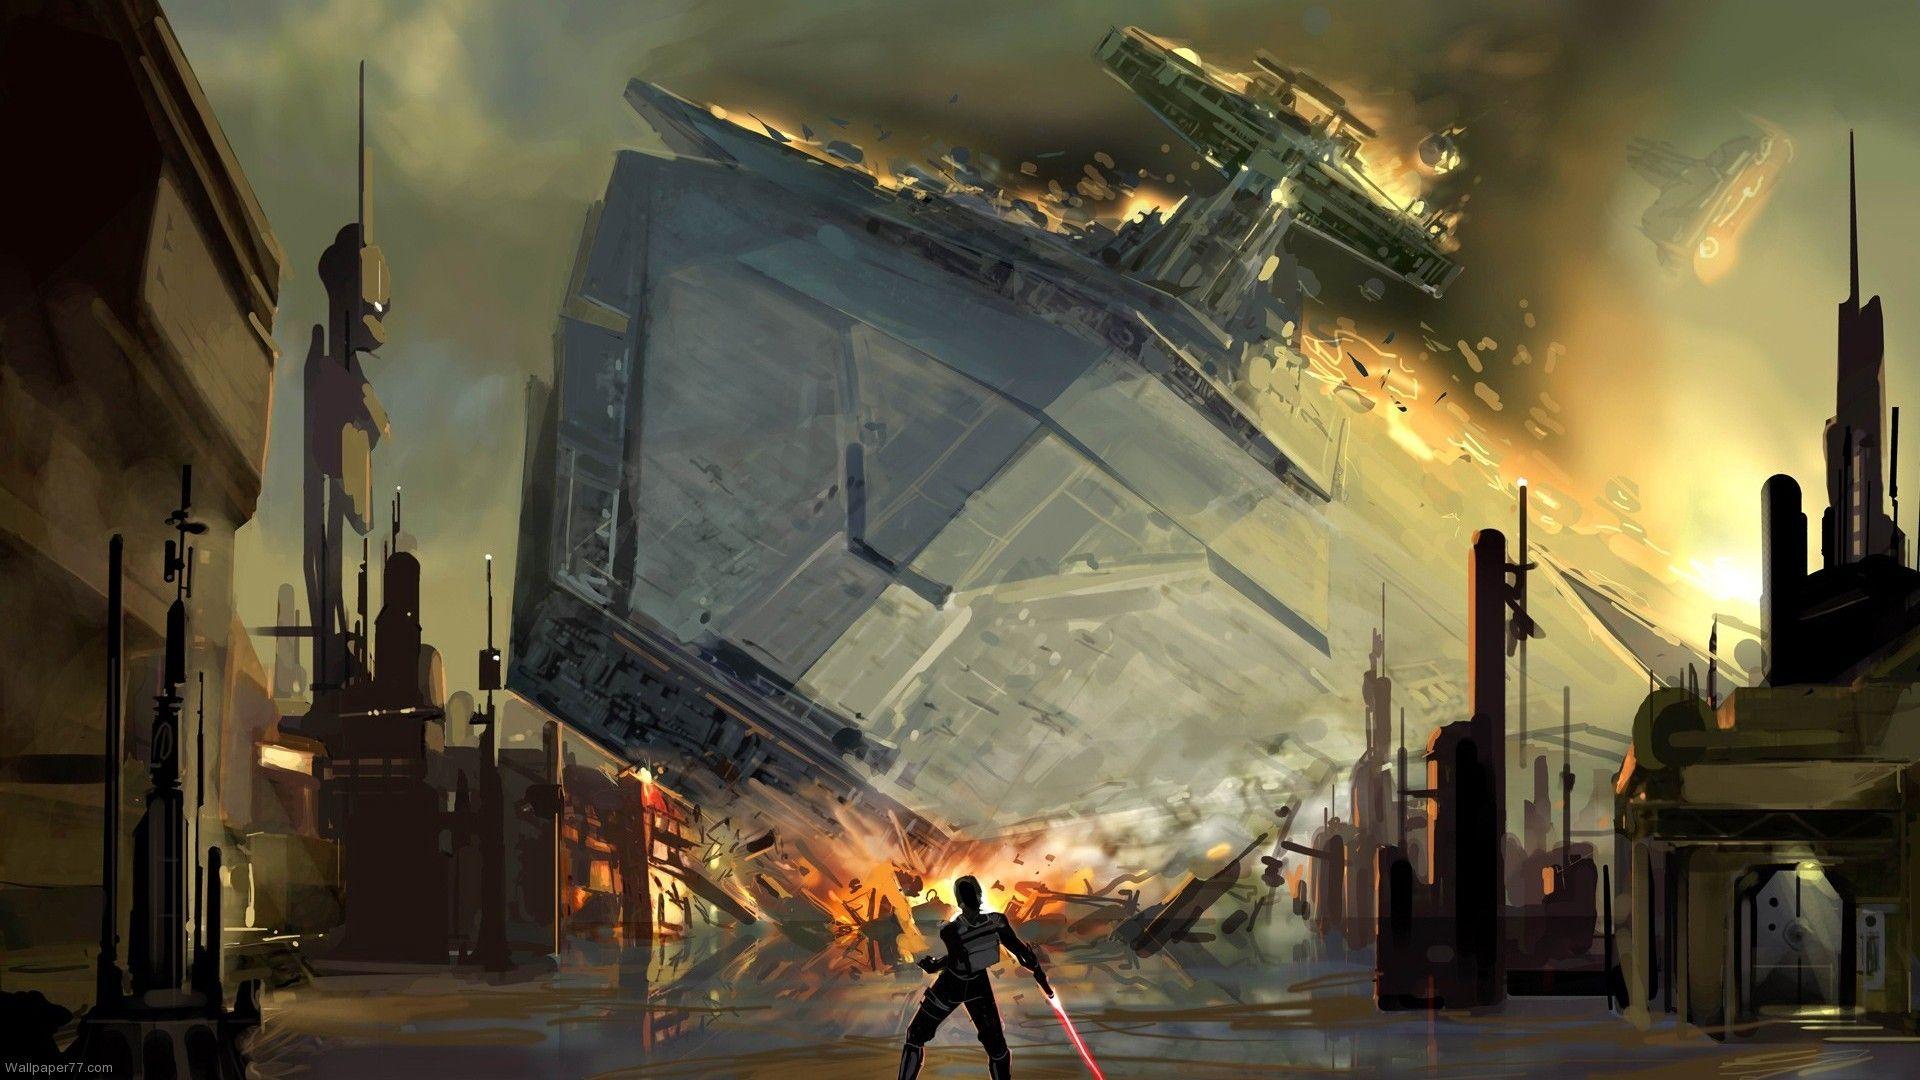 Star Wars Concept Art Wallpapers - Top Free Star Wars Concept Art